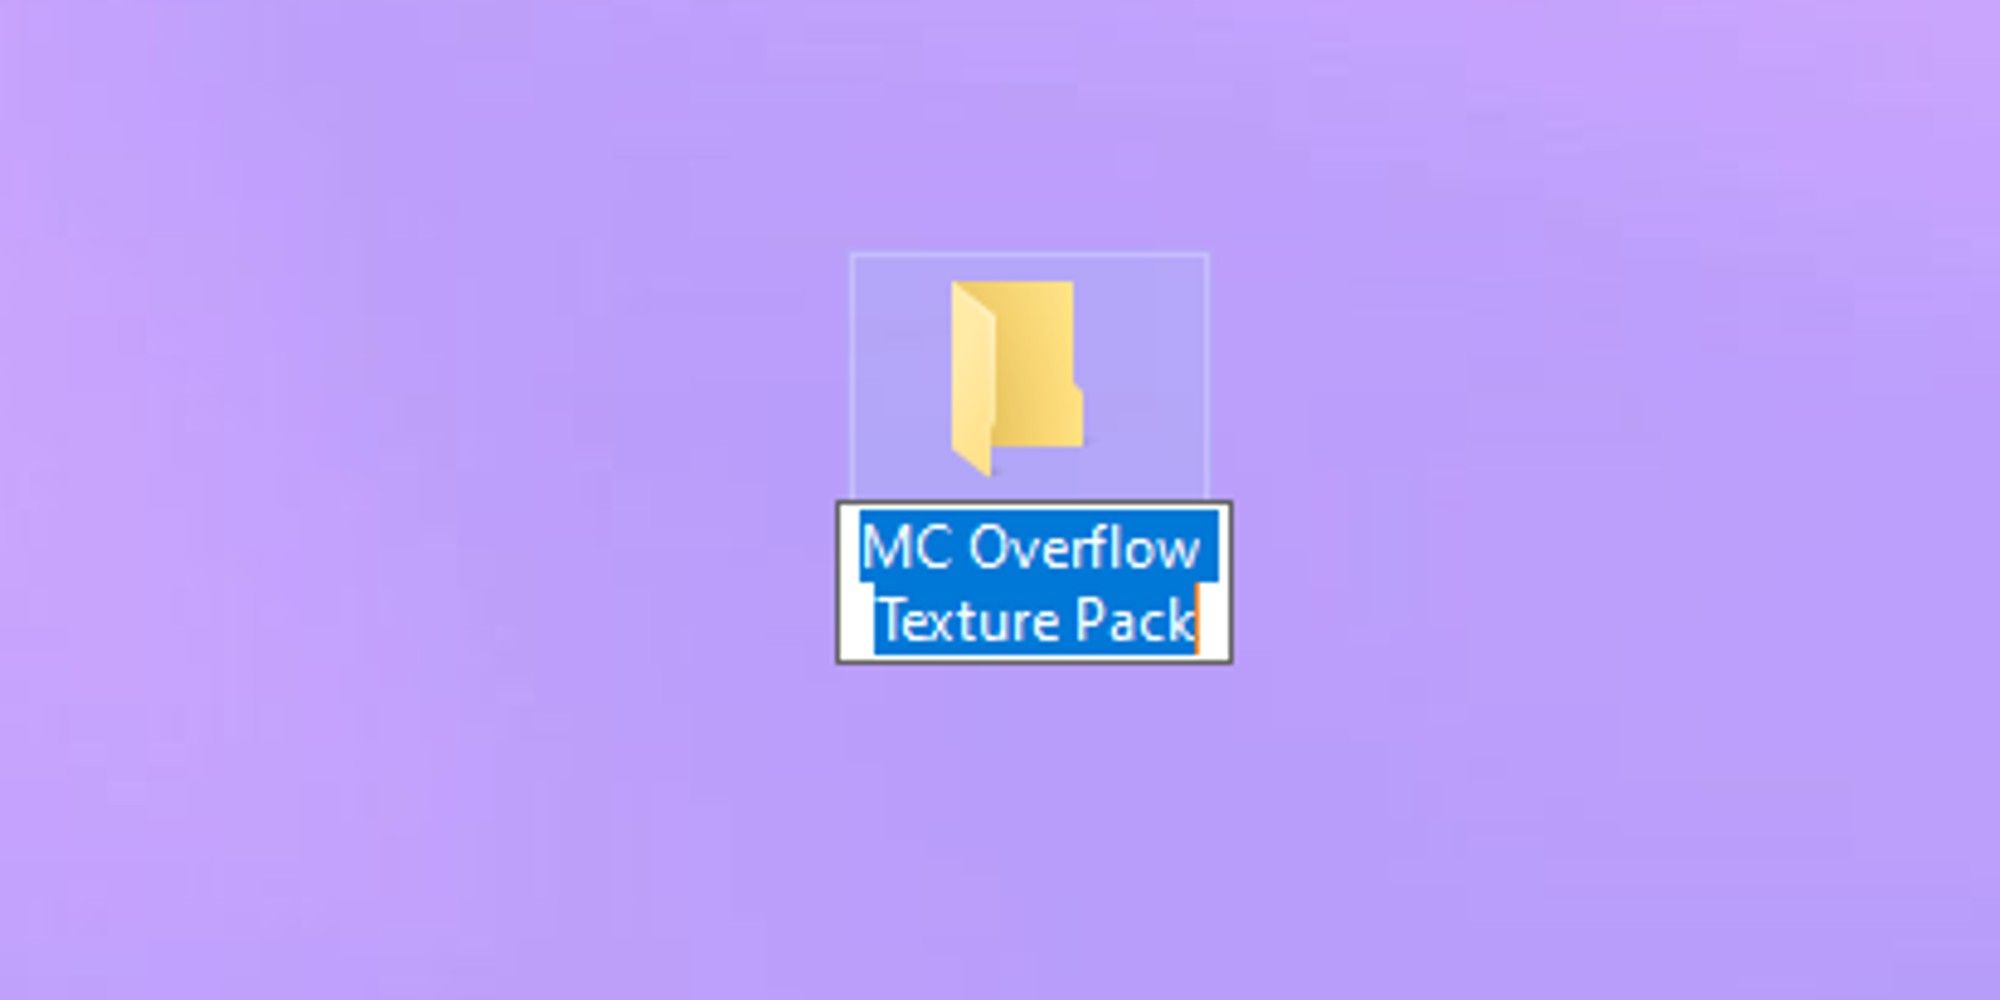 creating a new folder on the desktop